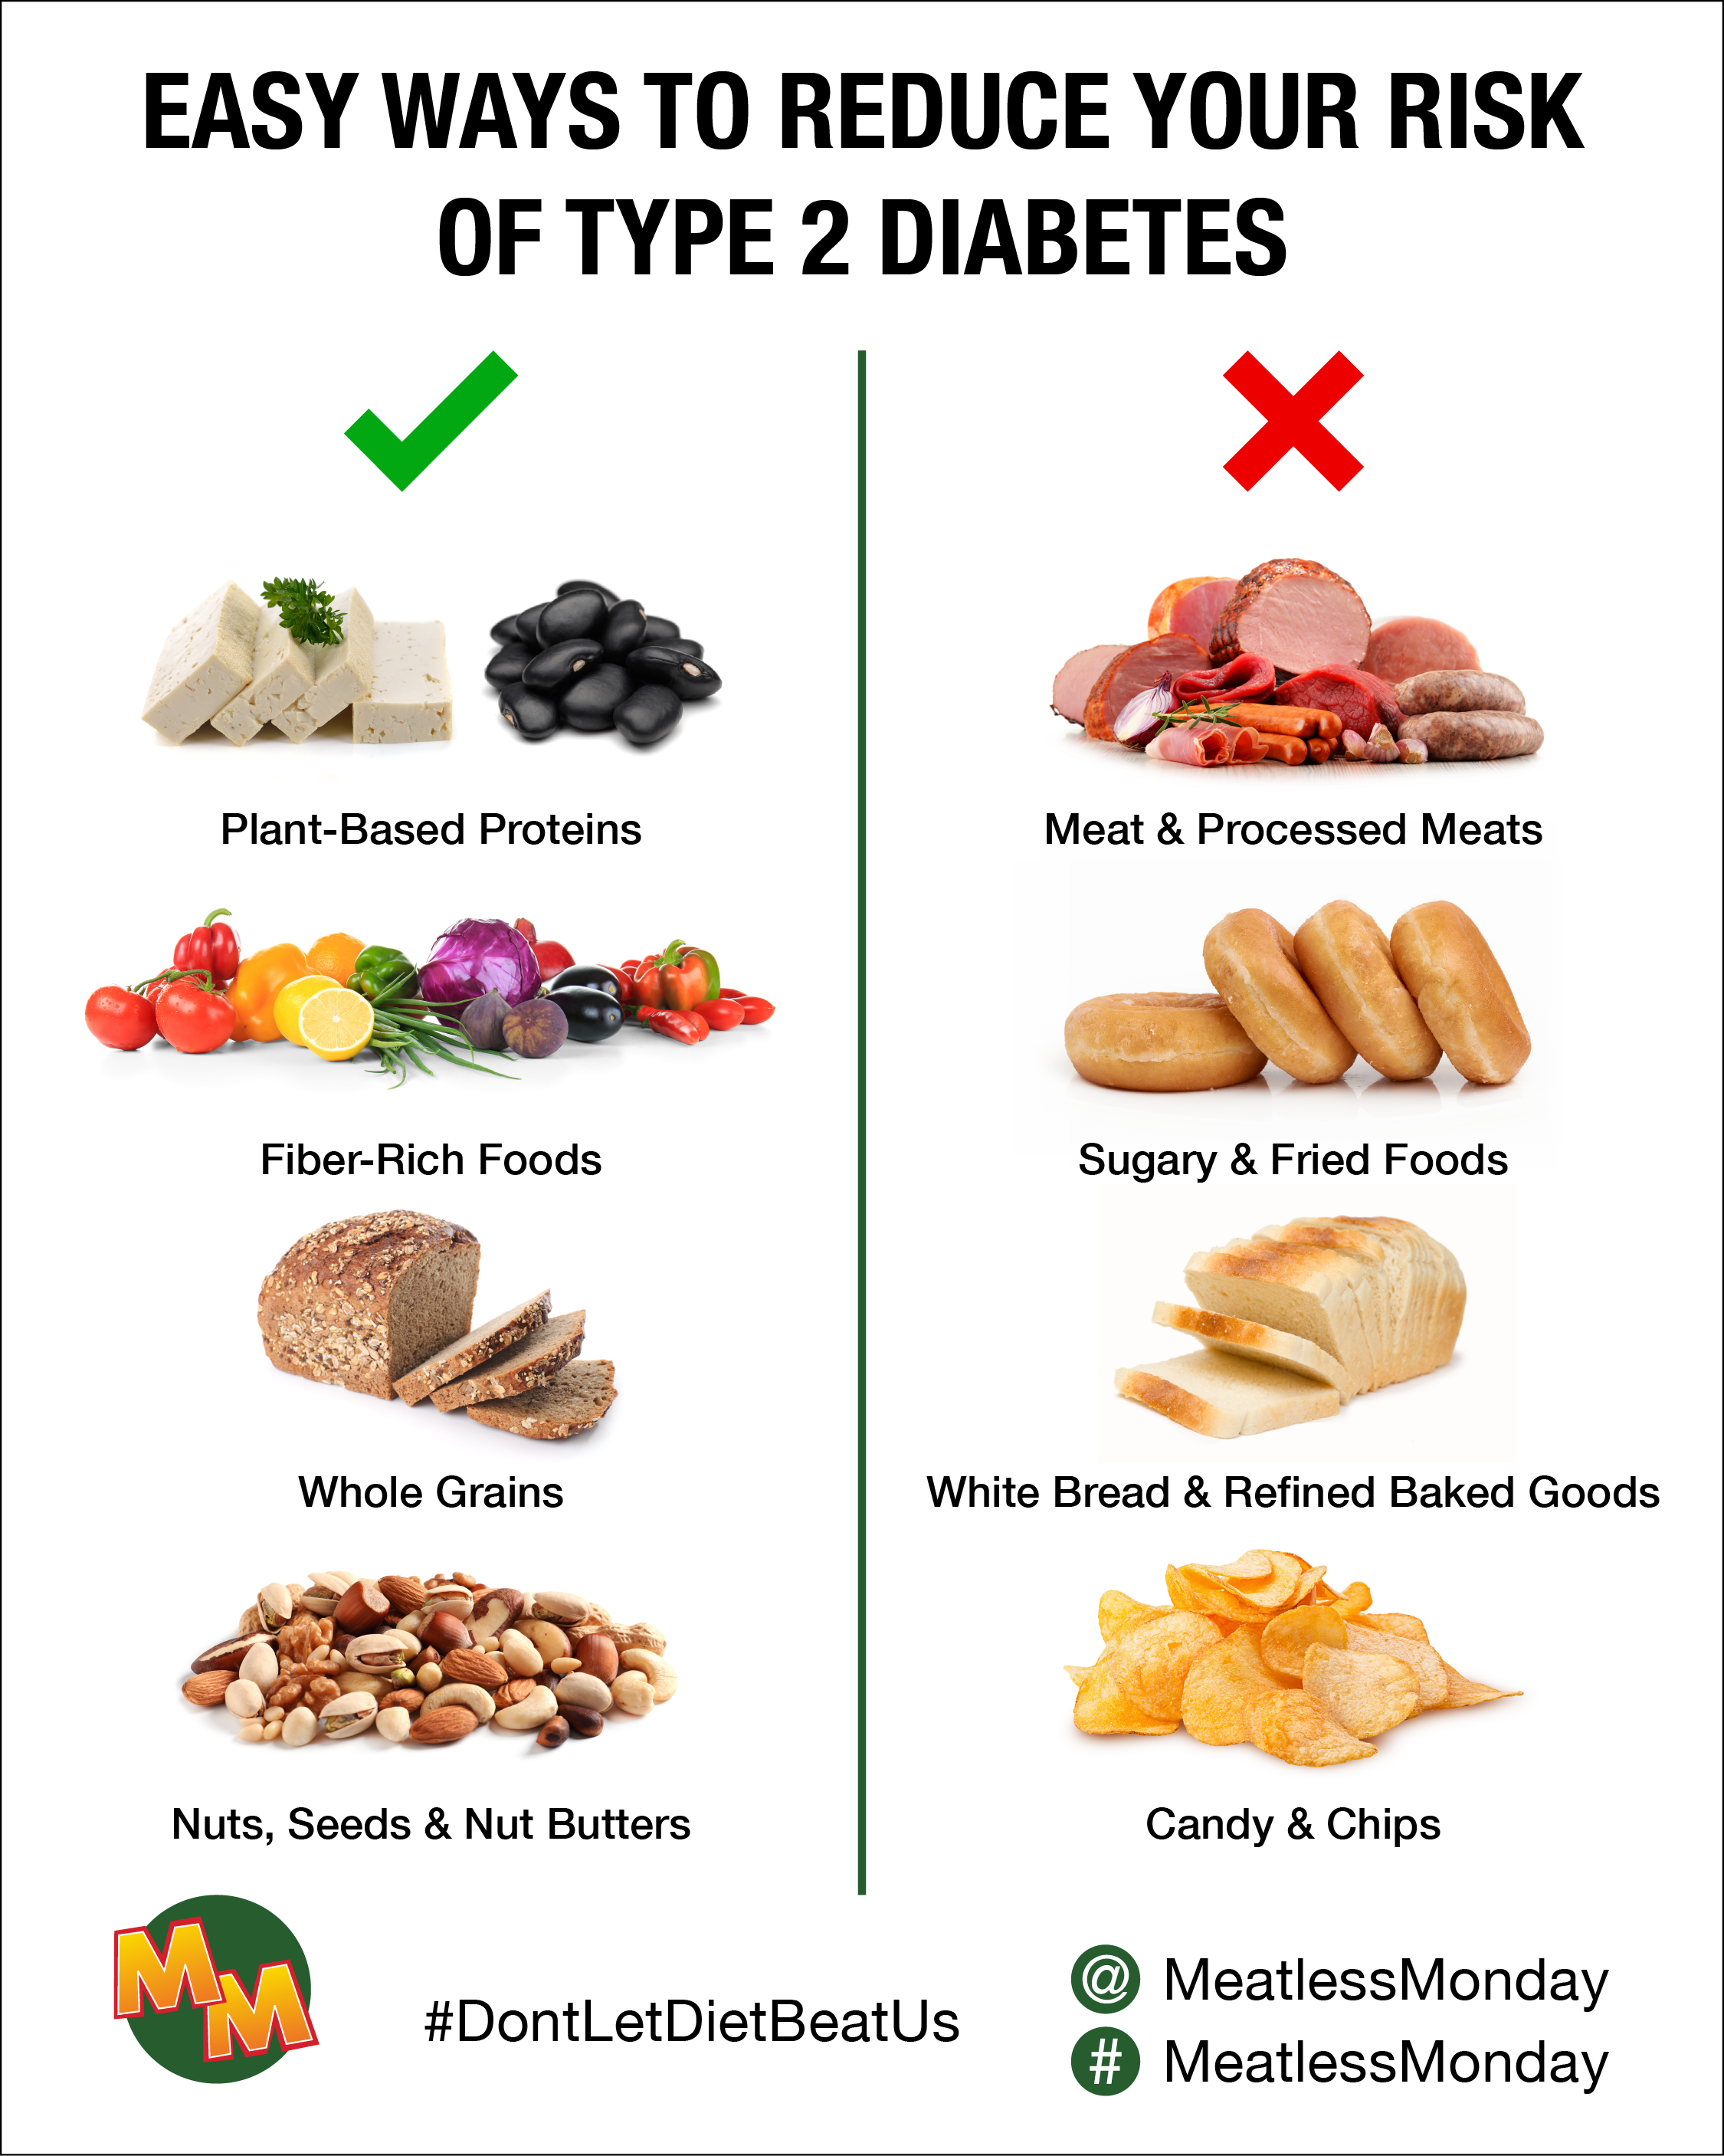 type 2 diabetes prevention